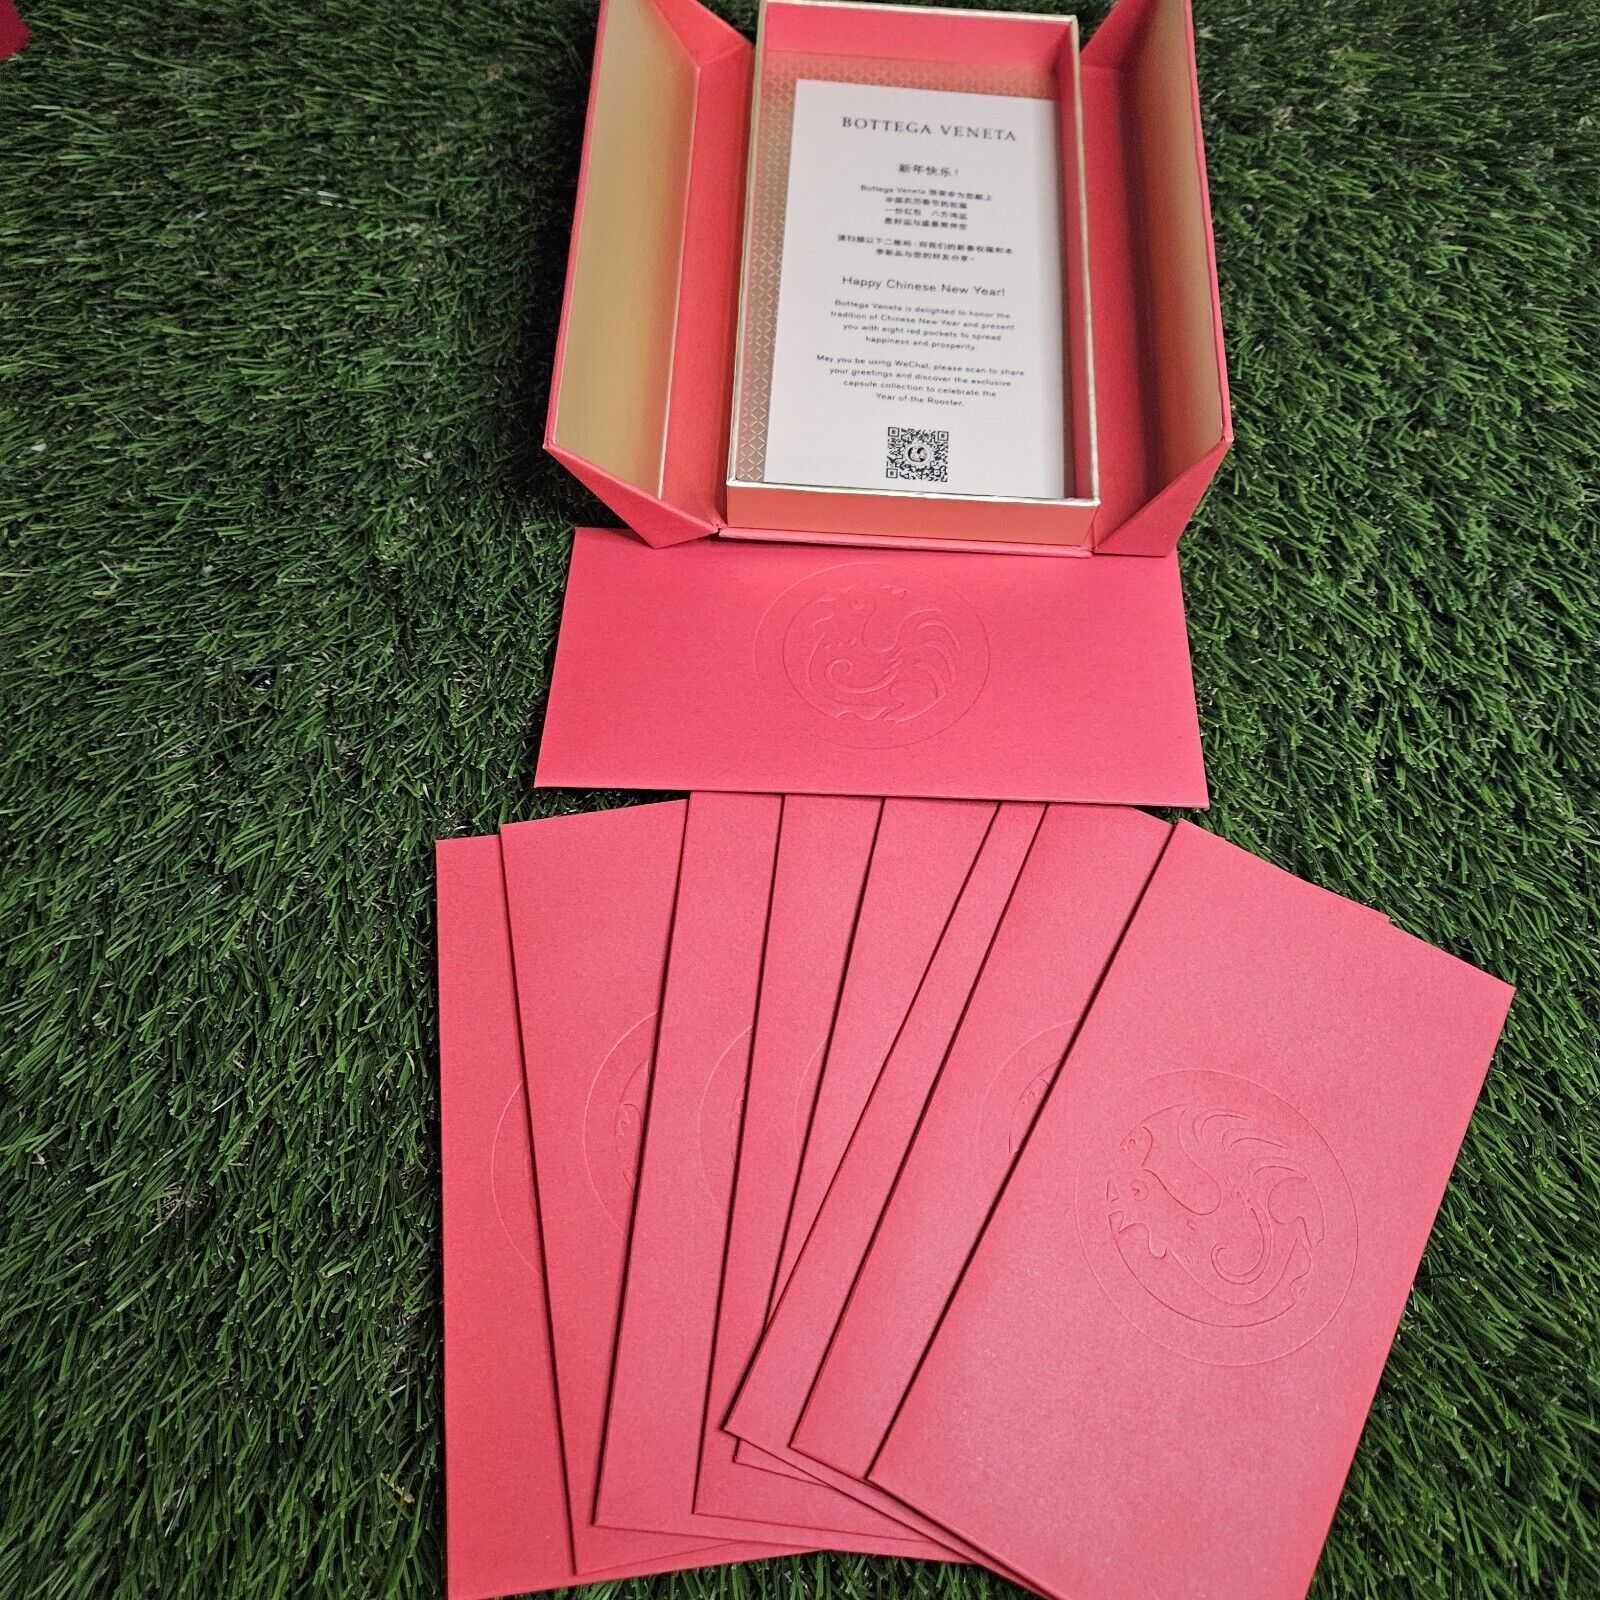 Bottega Veneta New Open Box Chinese New Year 8 Red Pockets/ Envelopes Rooster 